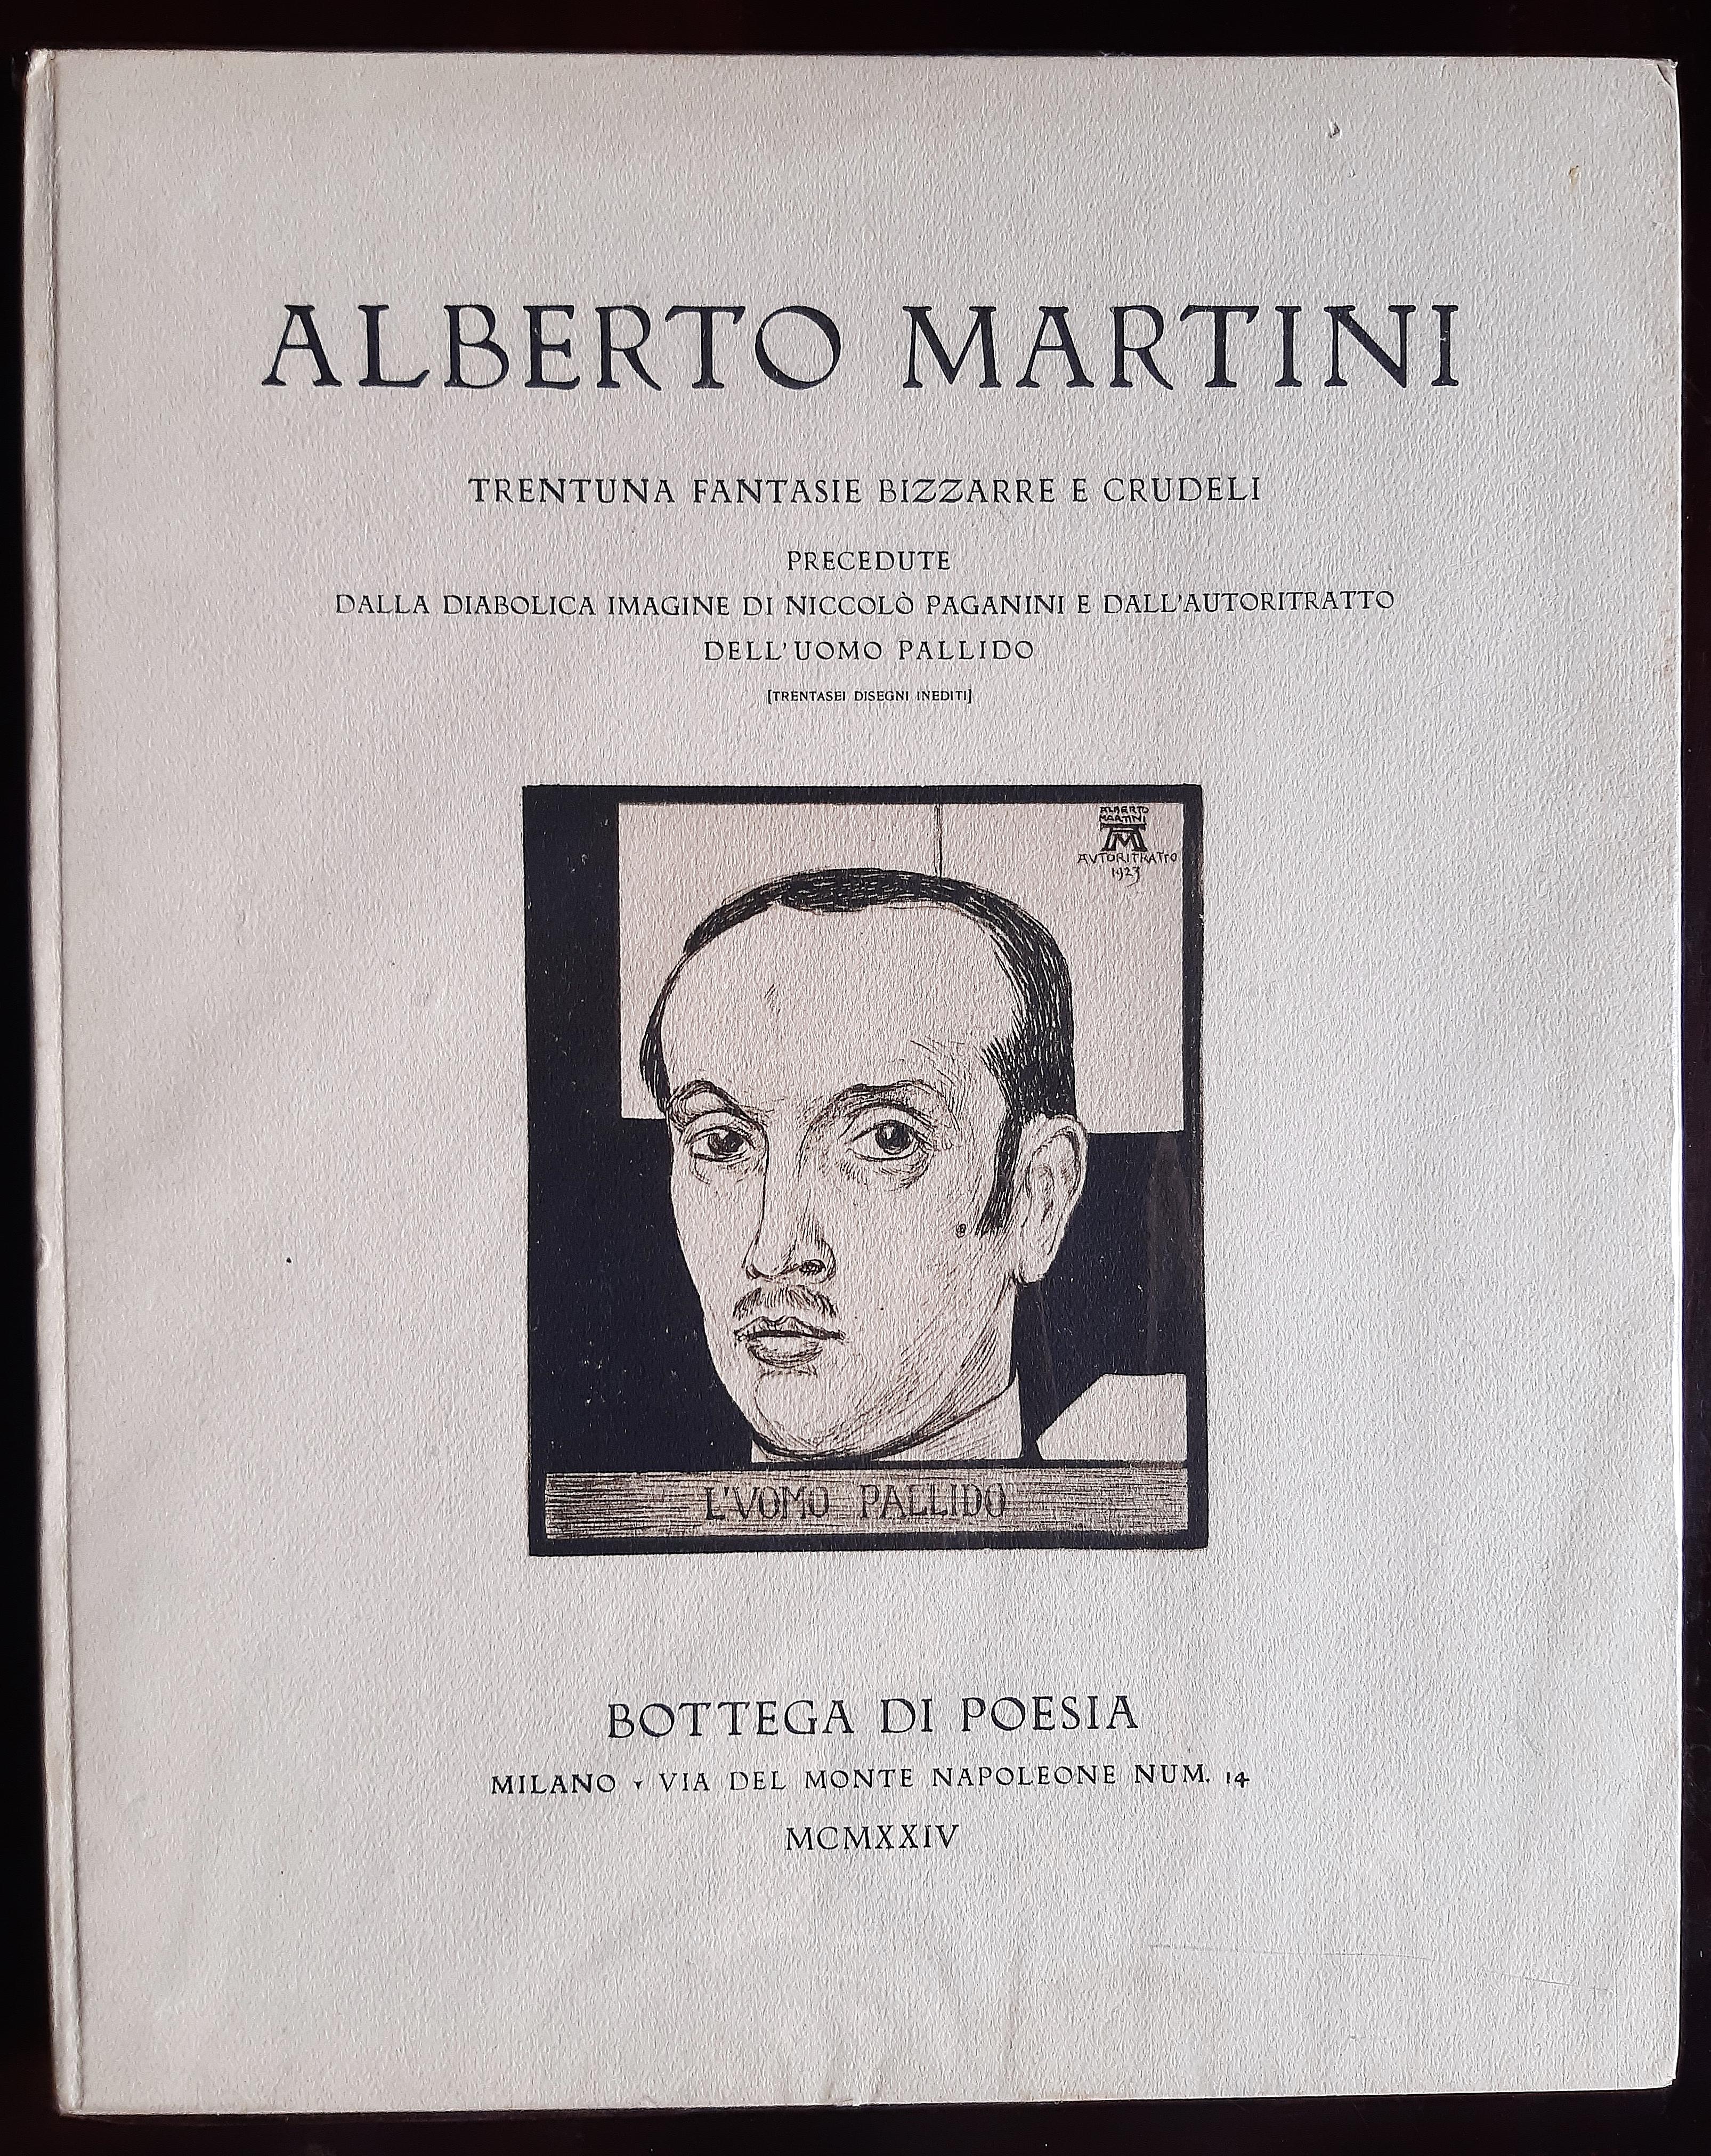 Livre rare illustré par Alberto Martini, Trentuna fantasie, 1924